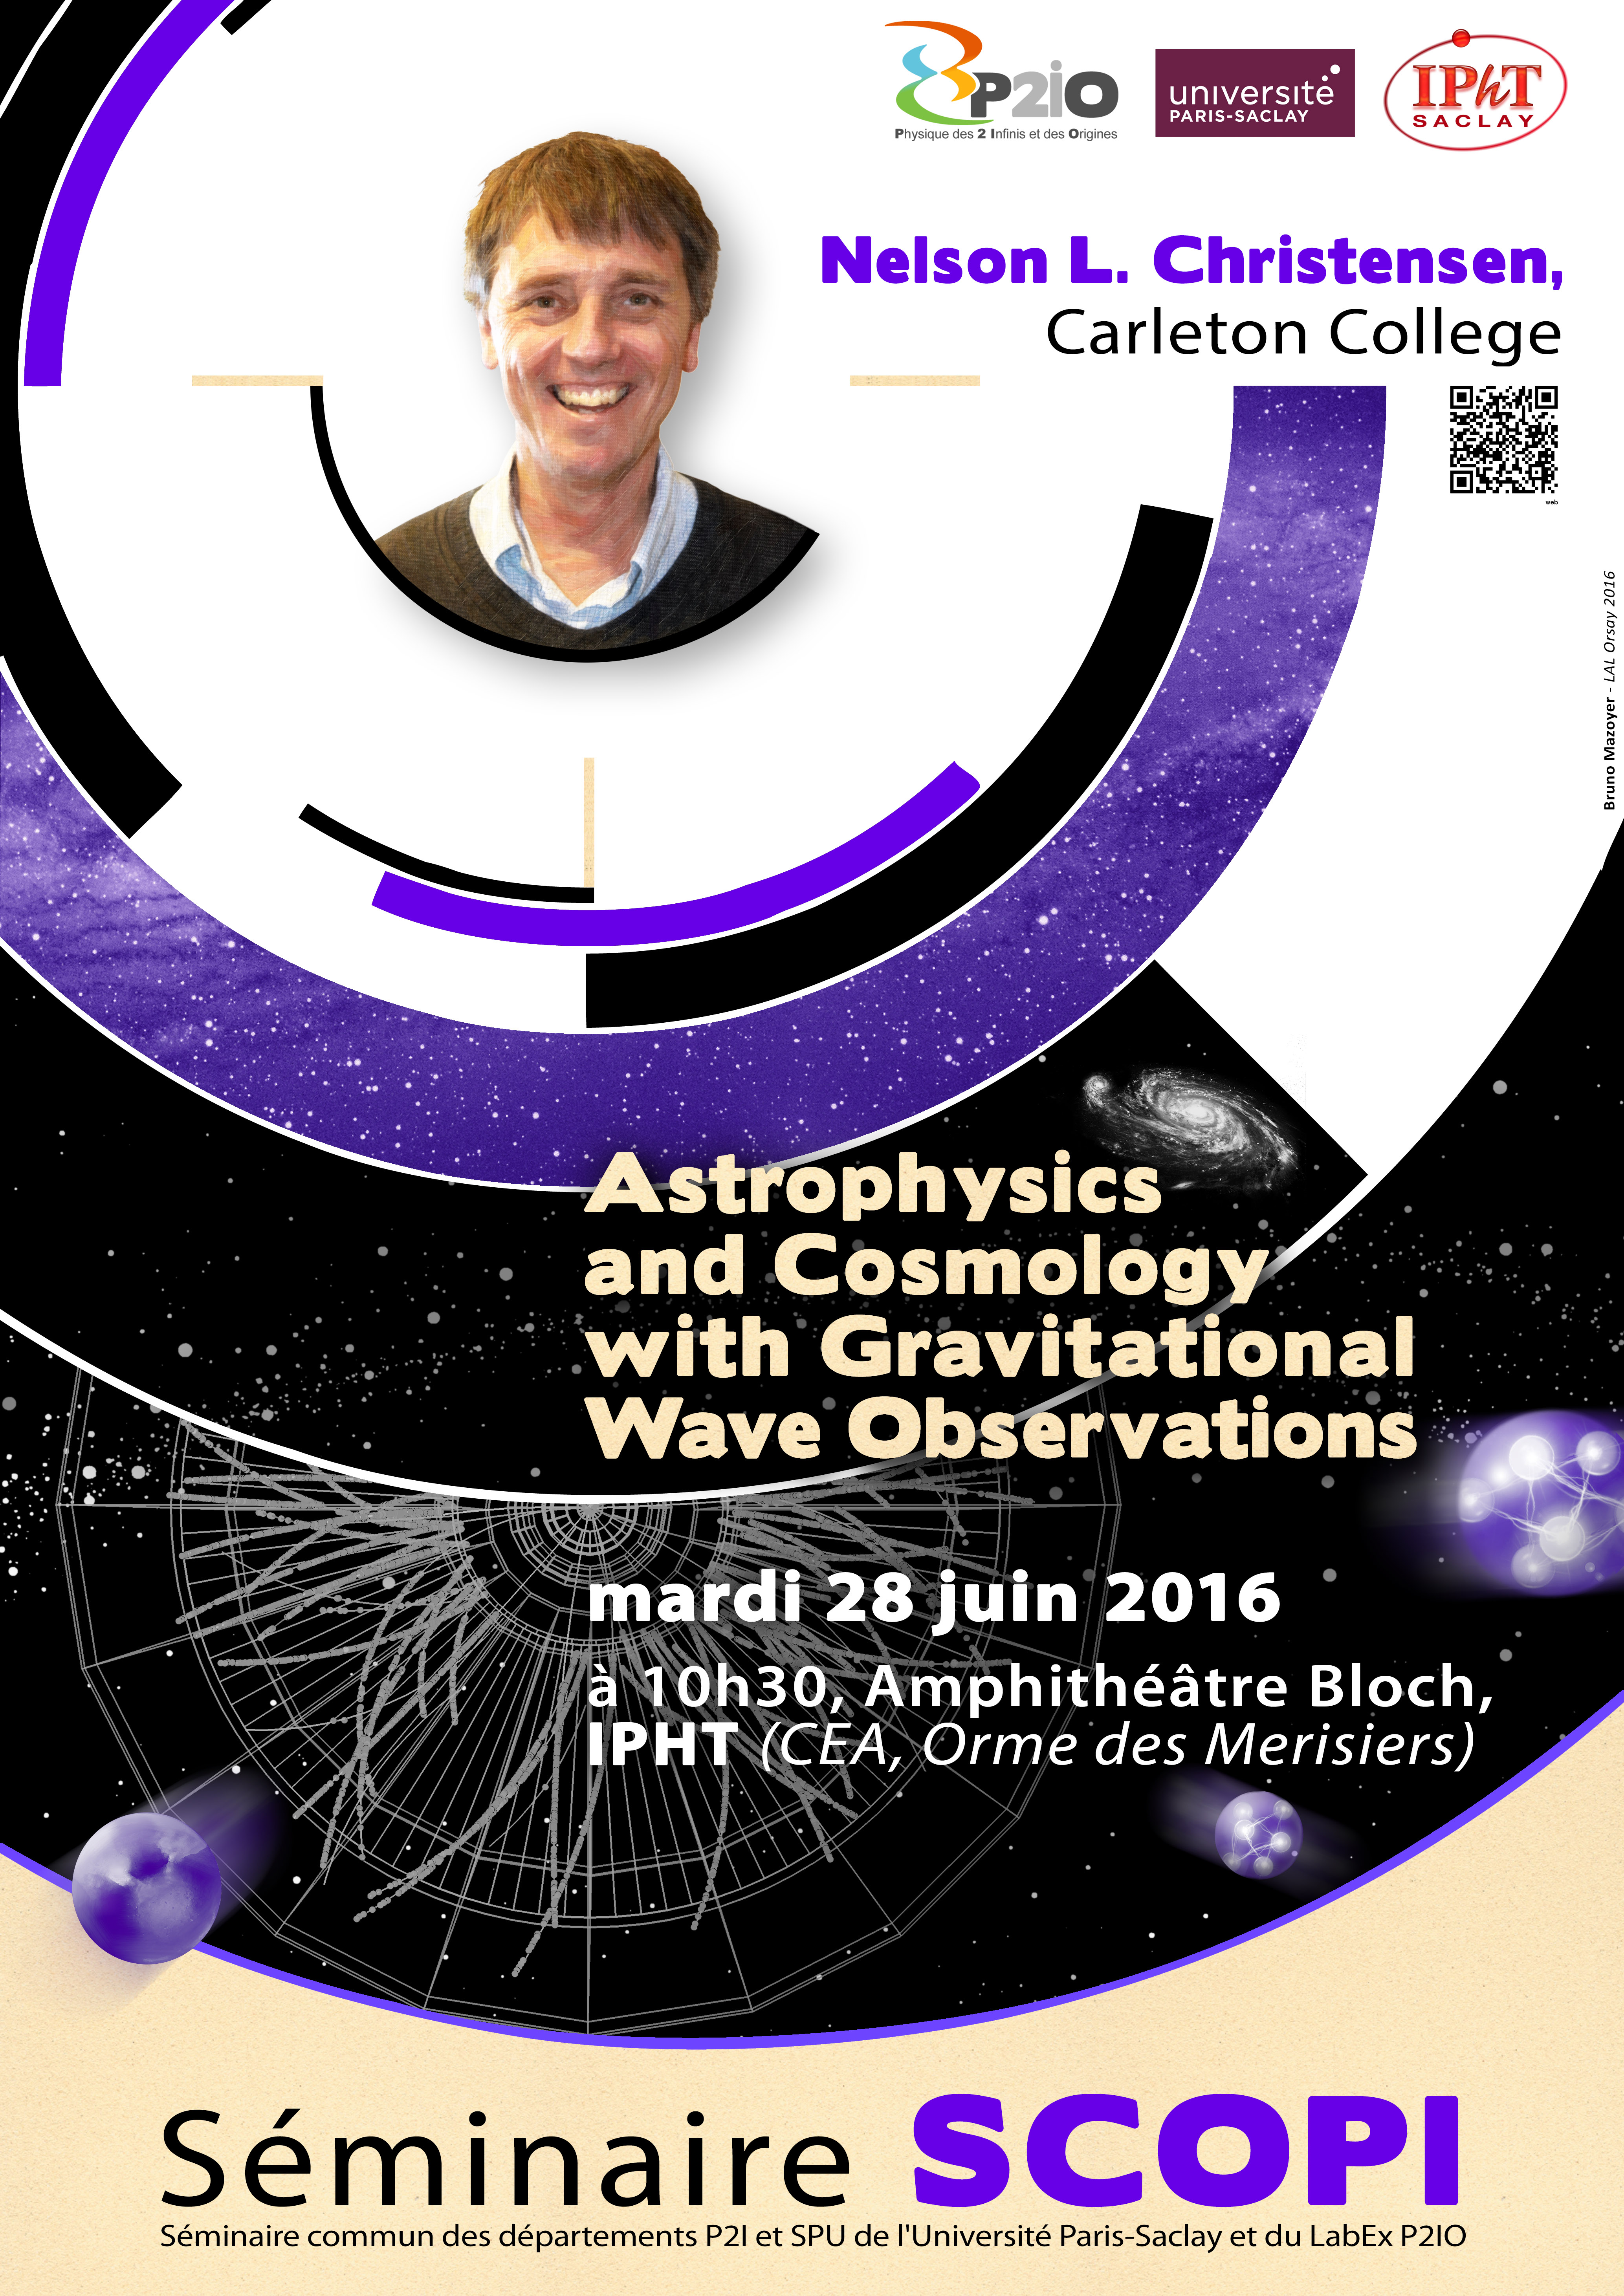 Astrophysics and Cosmology with Gravitational Wave Observations, par le Pr Nelson Christensen (Carleton College Northfield, MI)